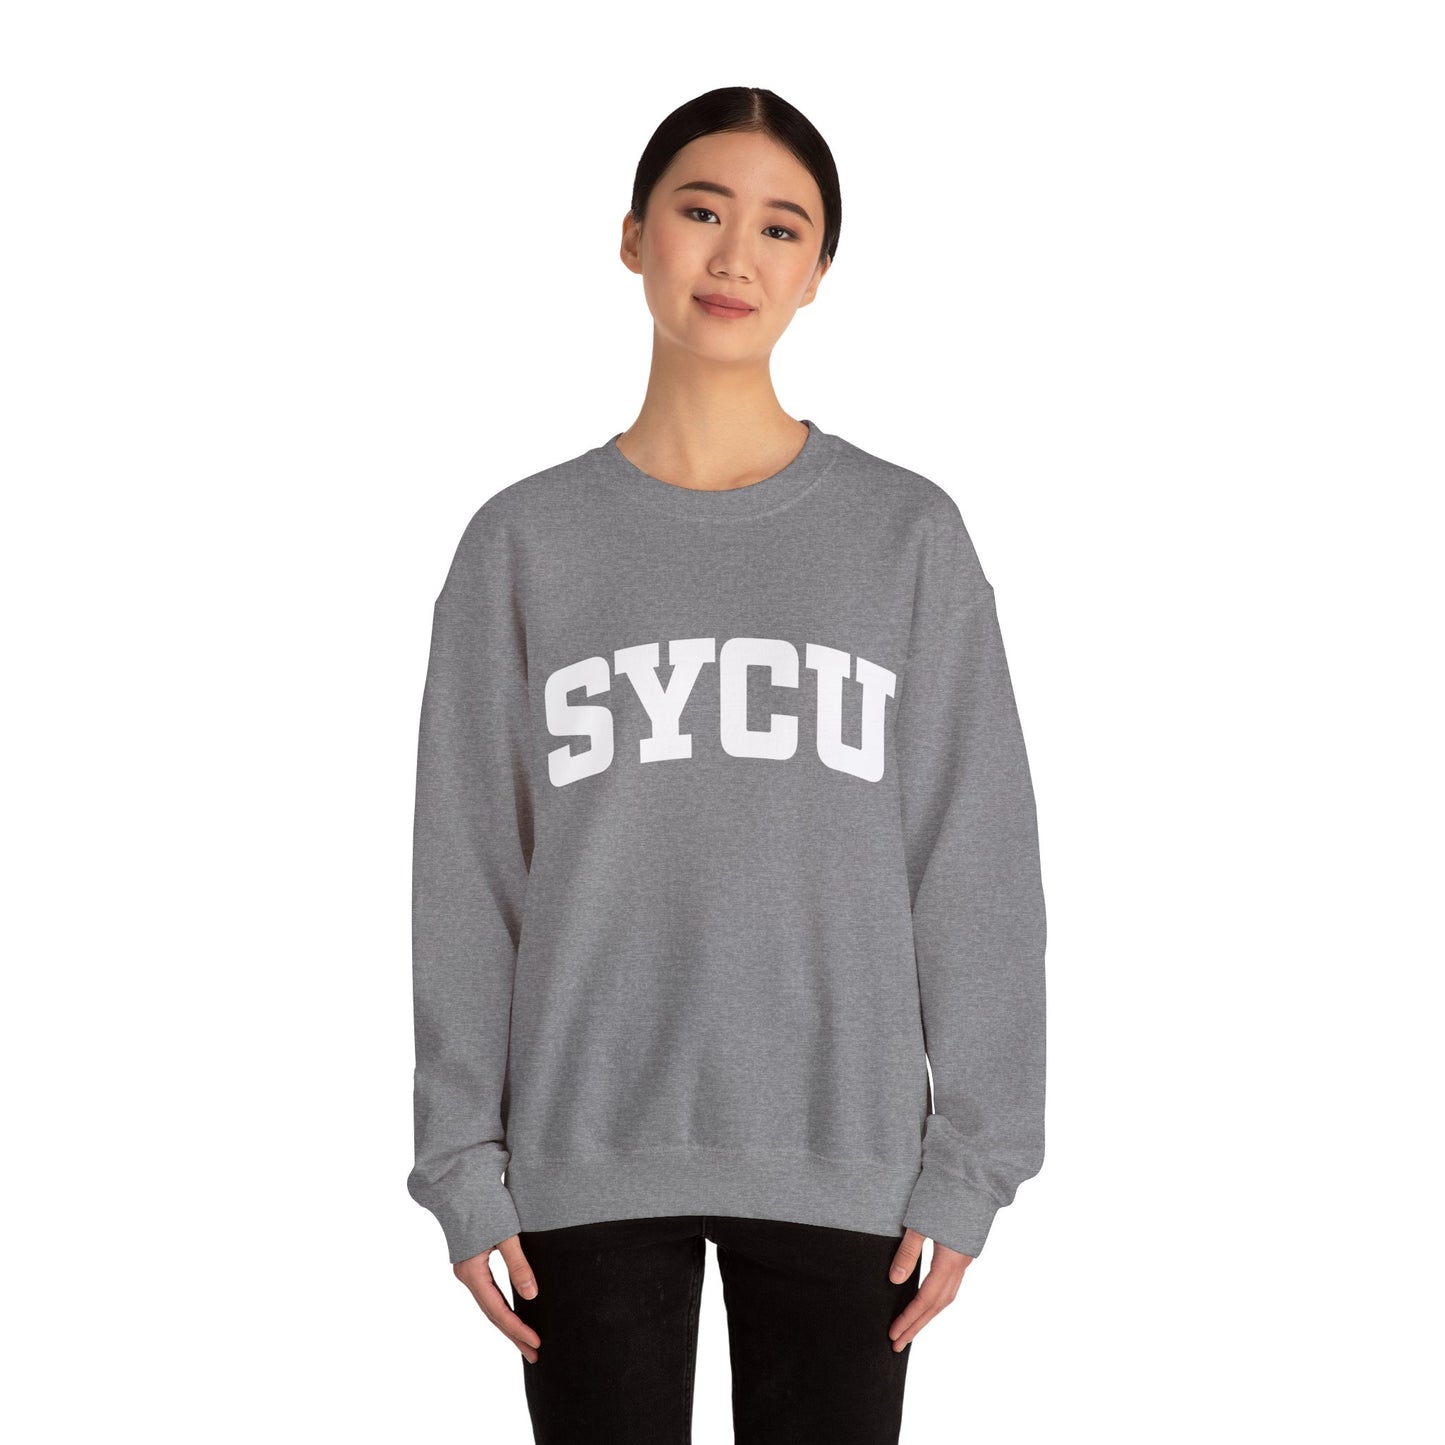 College | SYCU | Crewneck